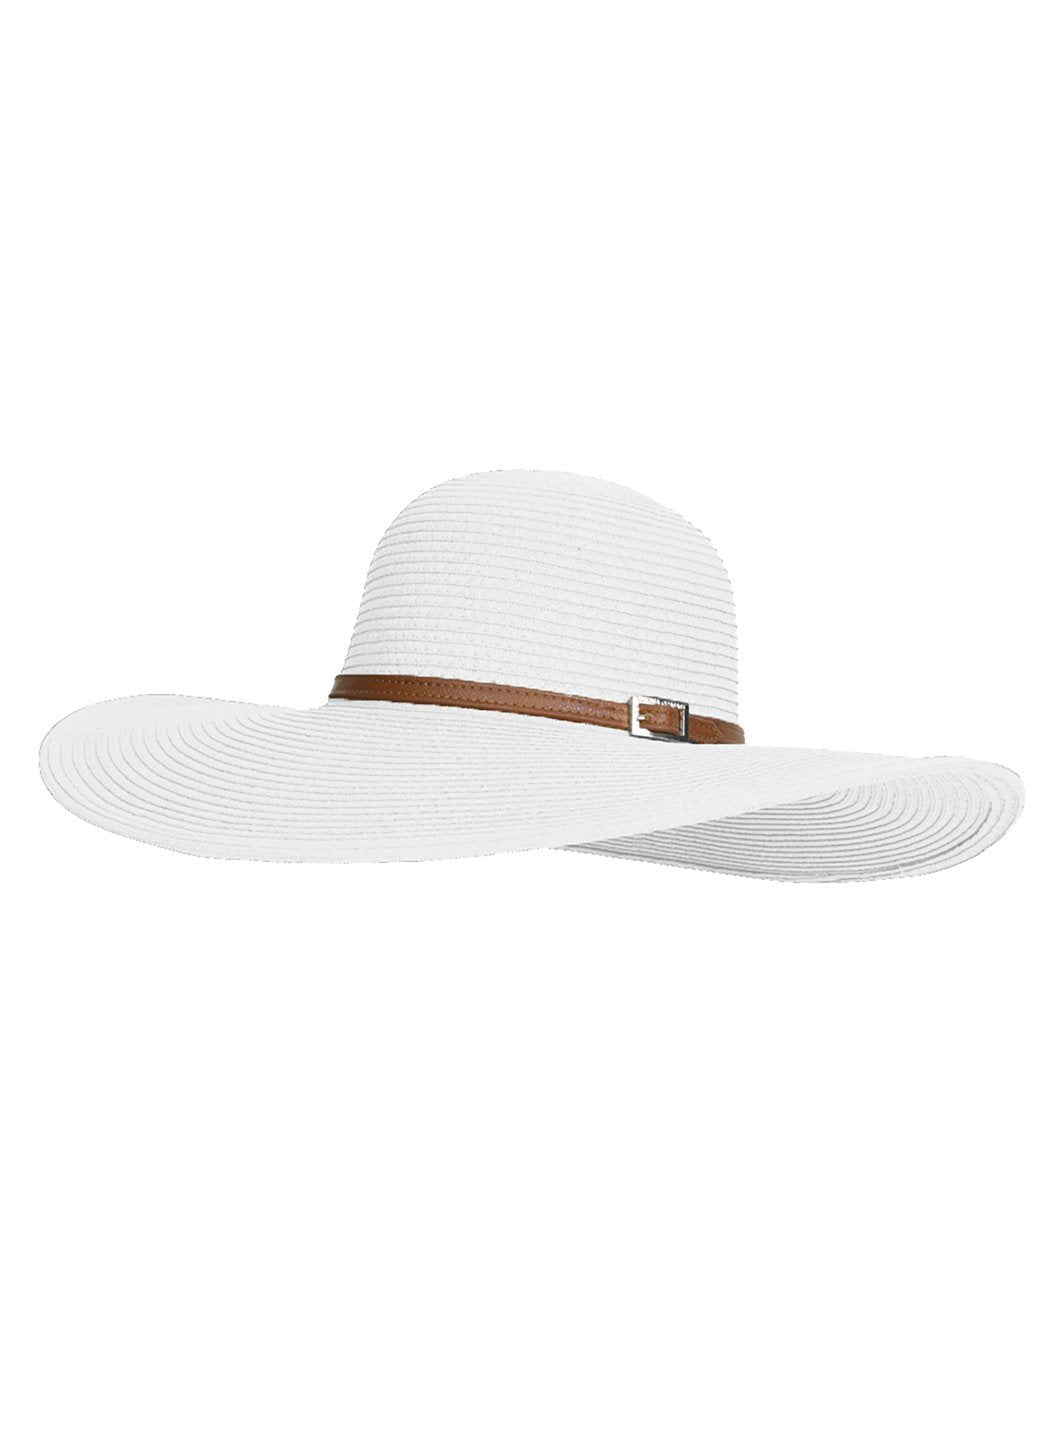 jemima white wide brimmed hat cutout